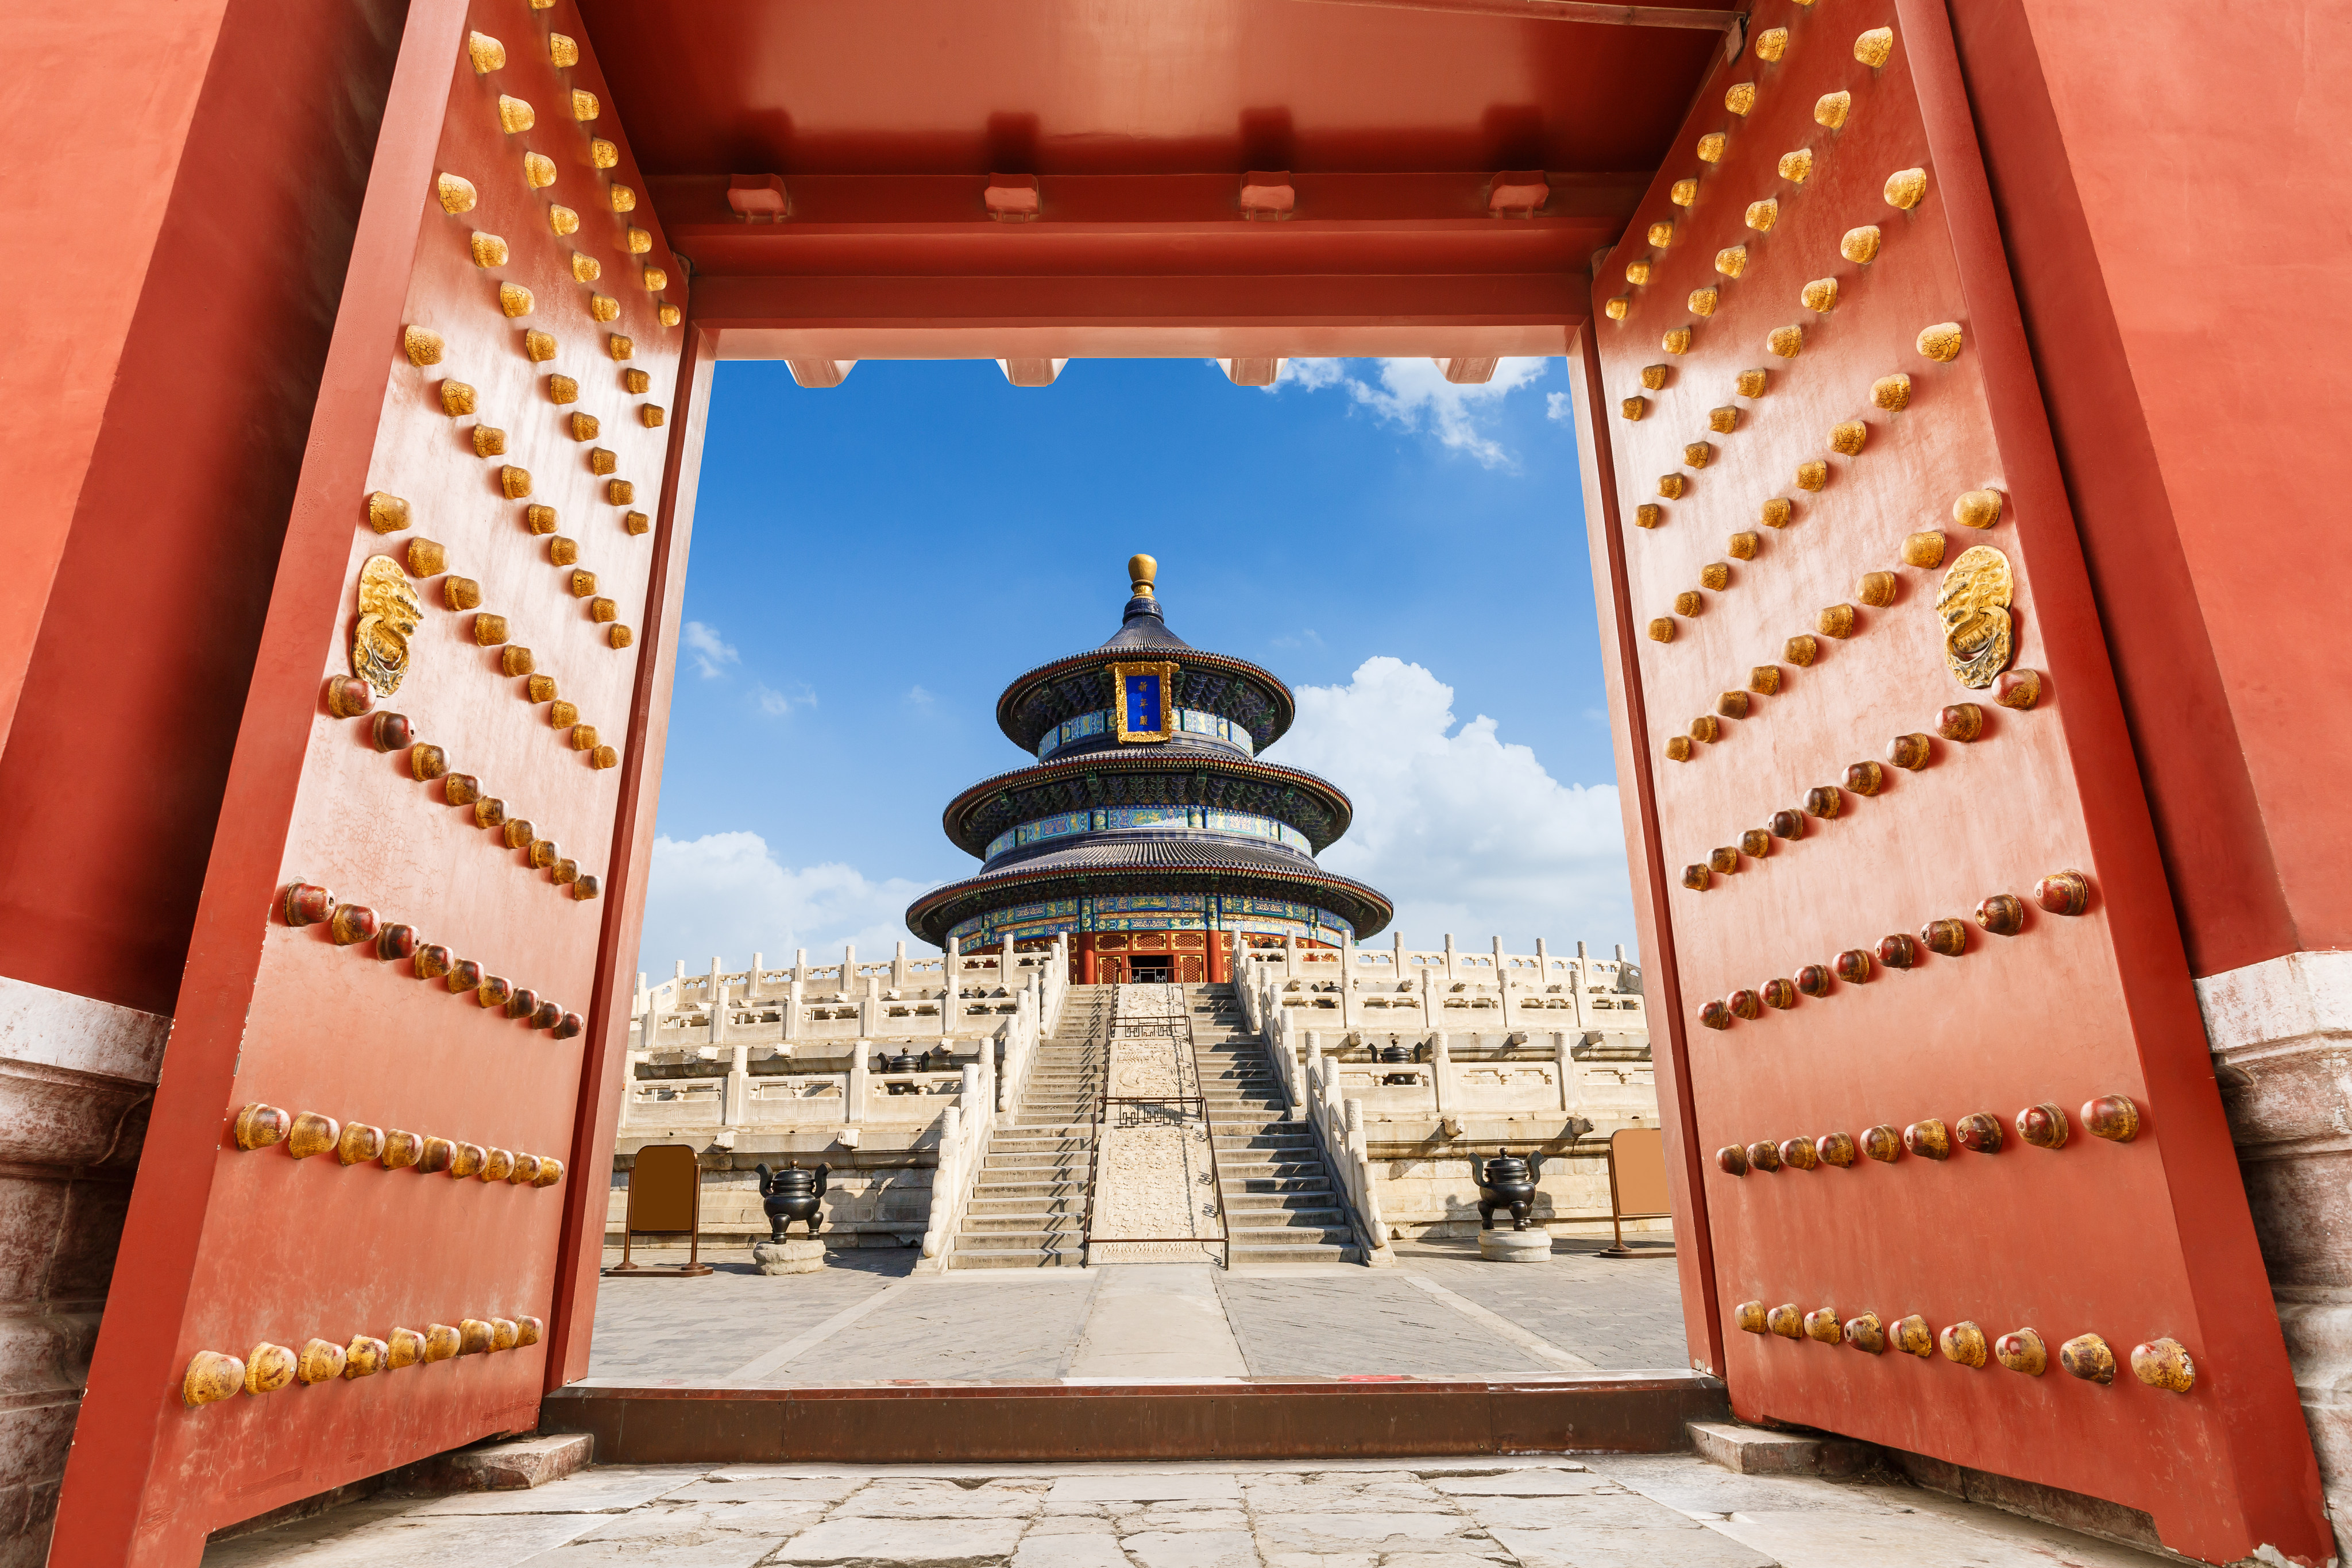 Temple gate. Храм неба в Пекине. Ancient City Beijing сувениры. Часовня звука Китай. Звуки Китая.